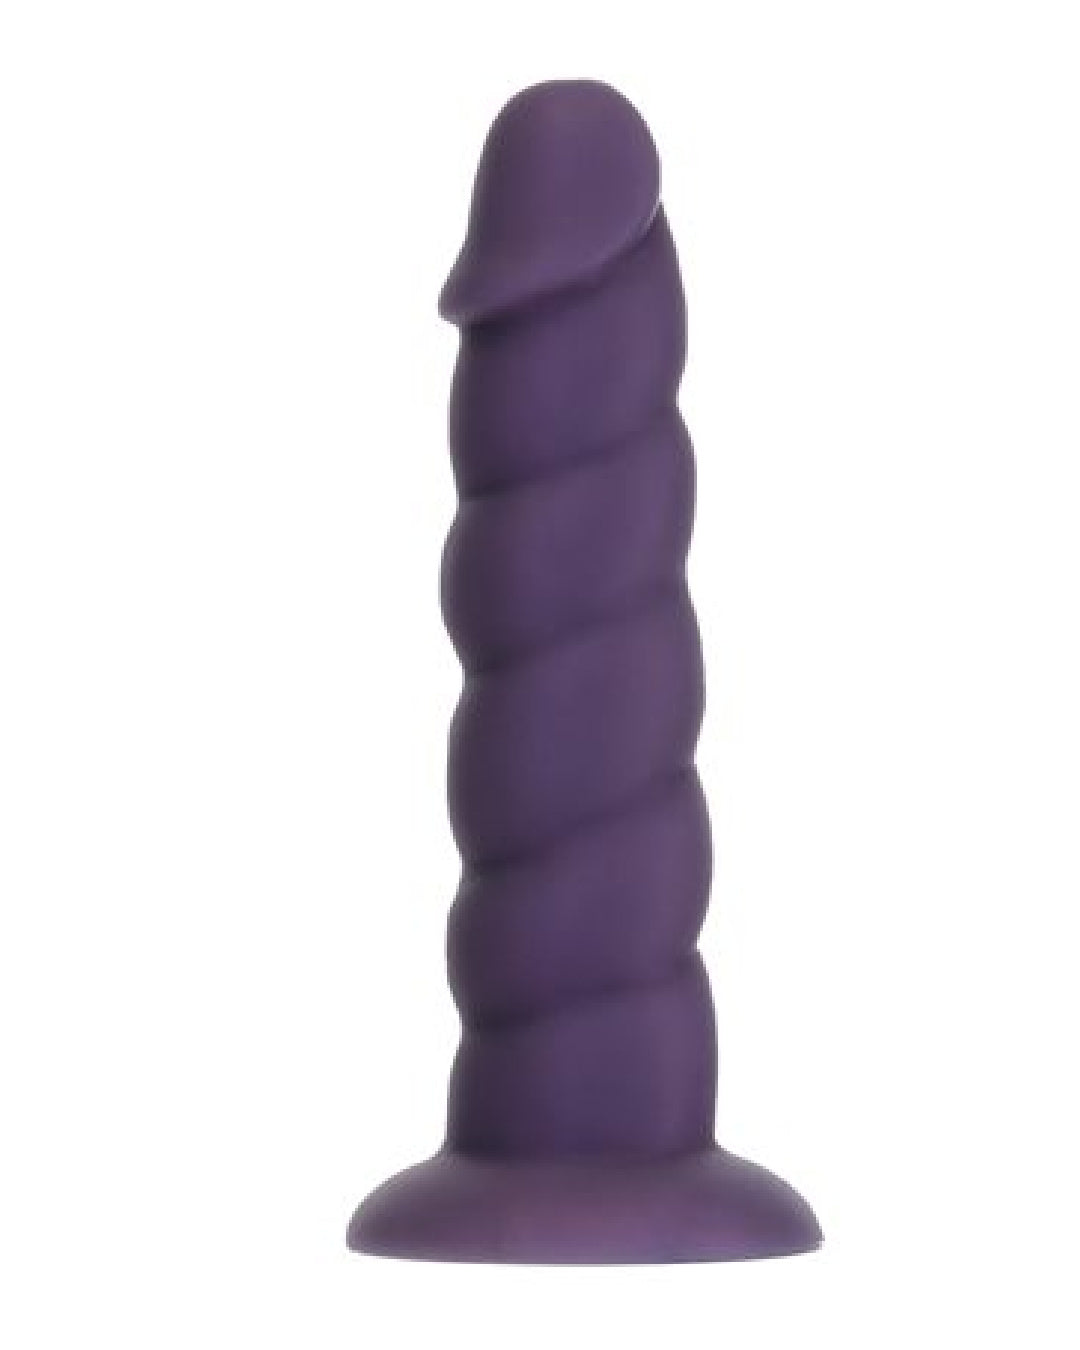 Fantasy Purple Unicorn Horn 7 Inch Silicone Dildo upright against a white background